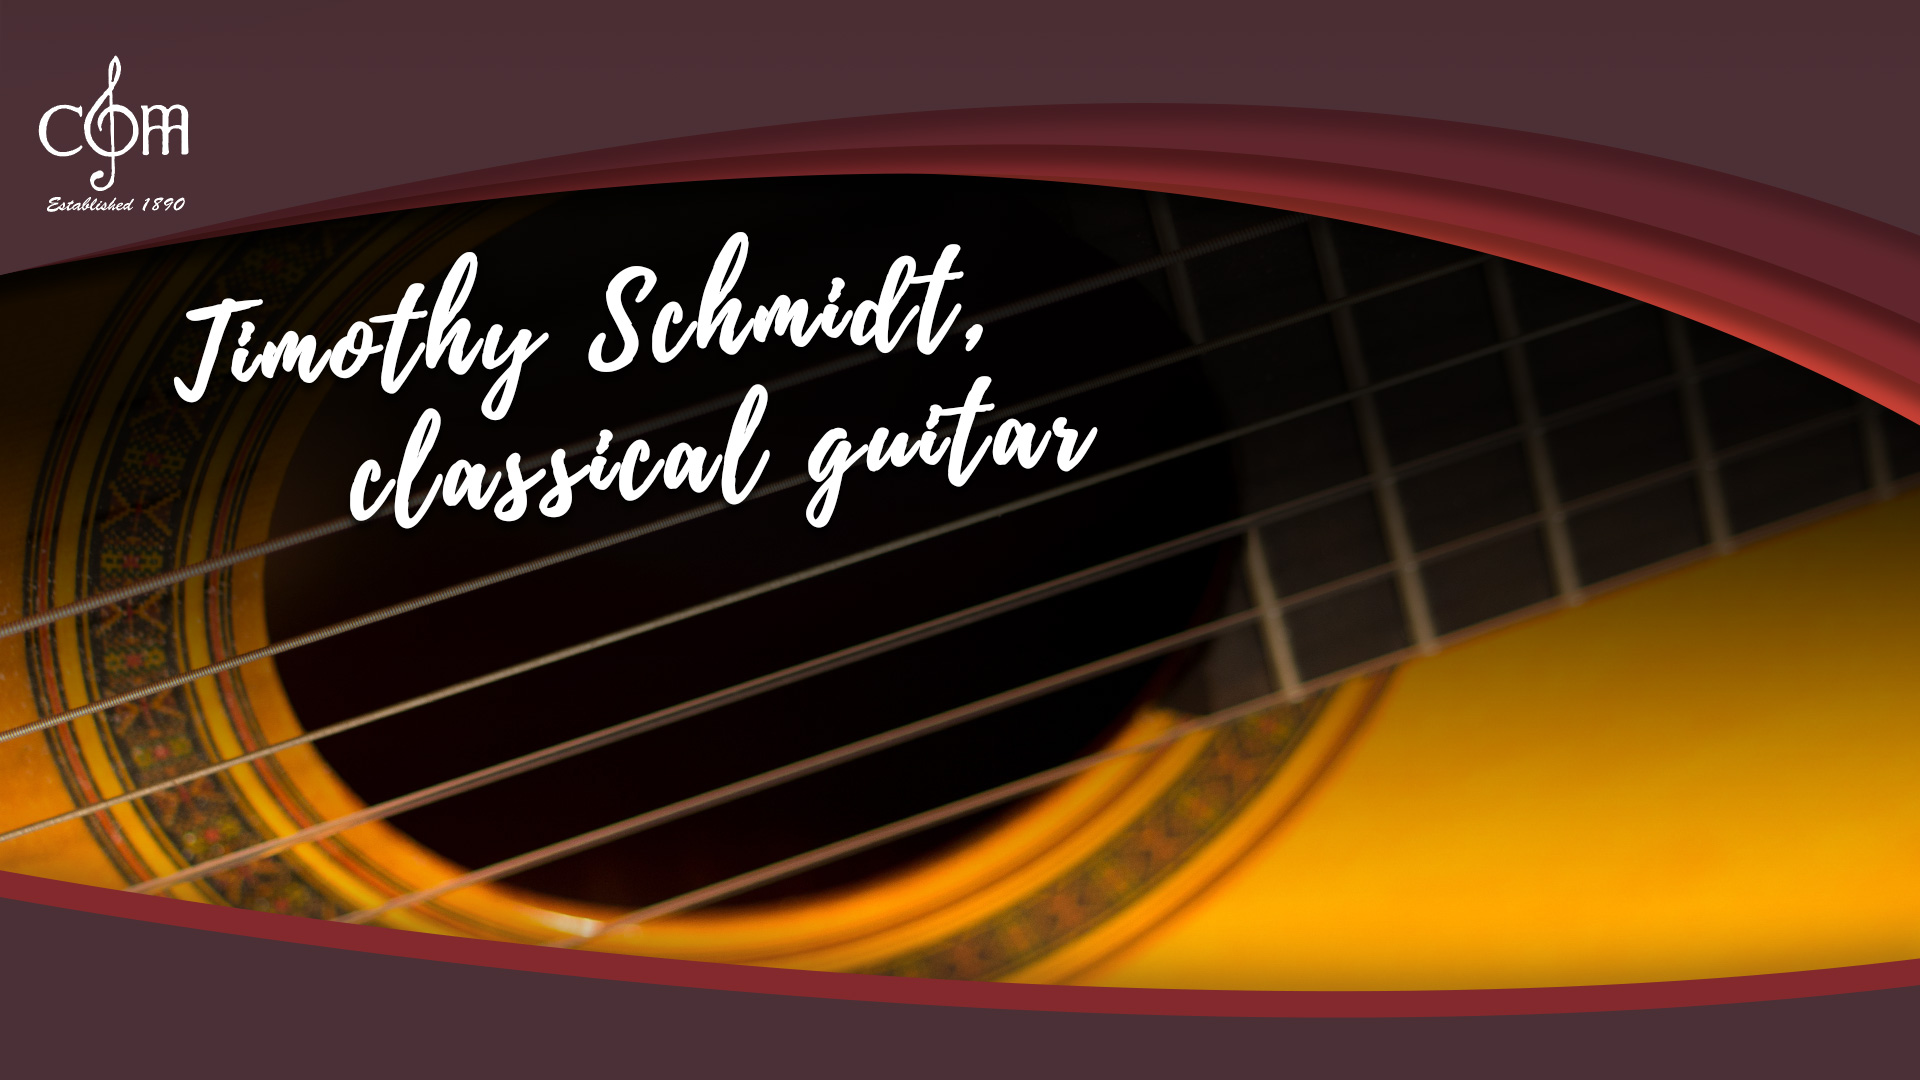 Timothy Schmidt, guitar